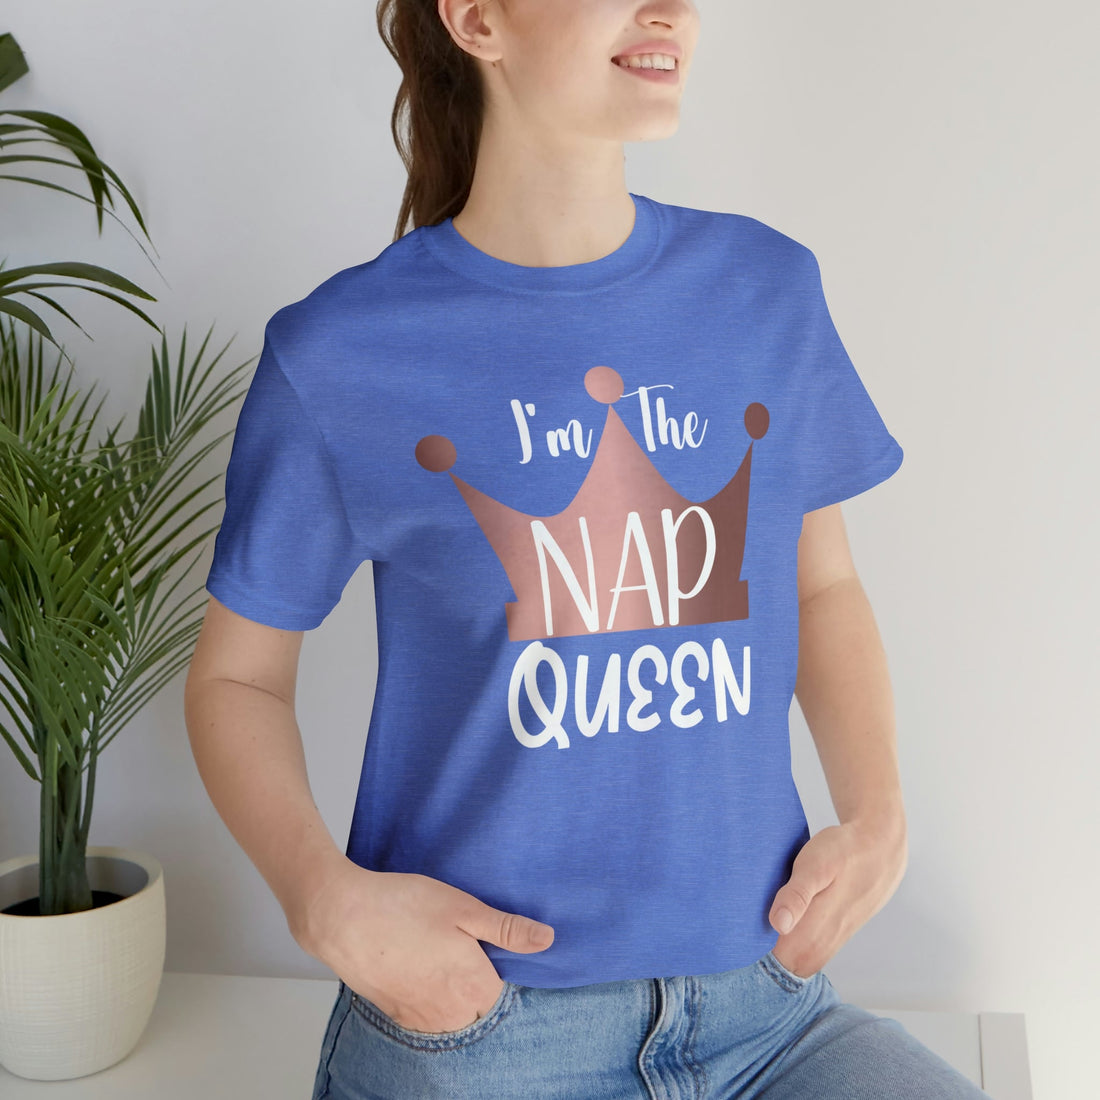 Nap Queen - T-Shirt - Positively Sassy - Nap Queen